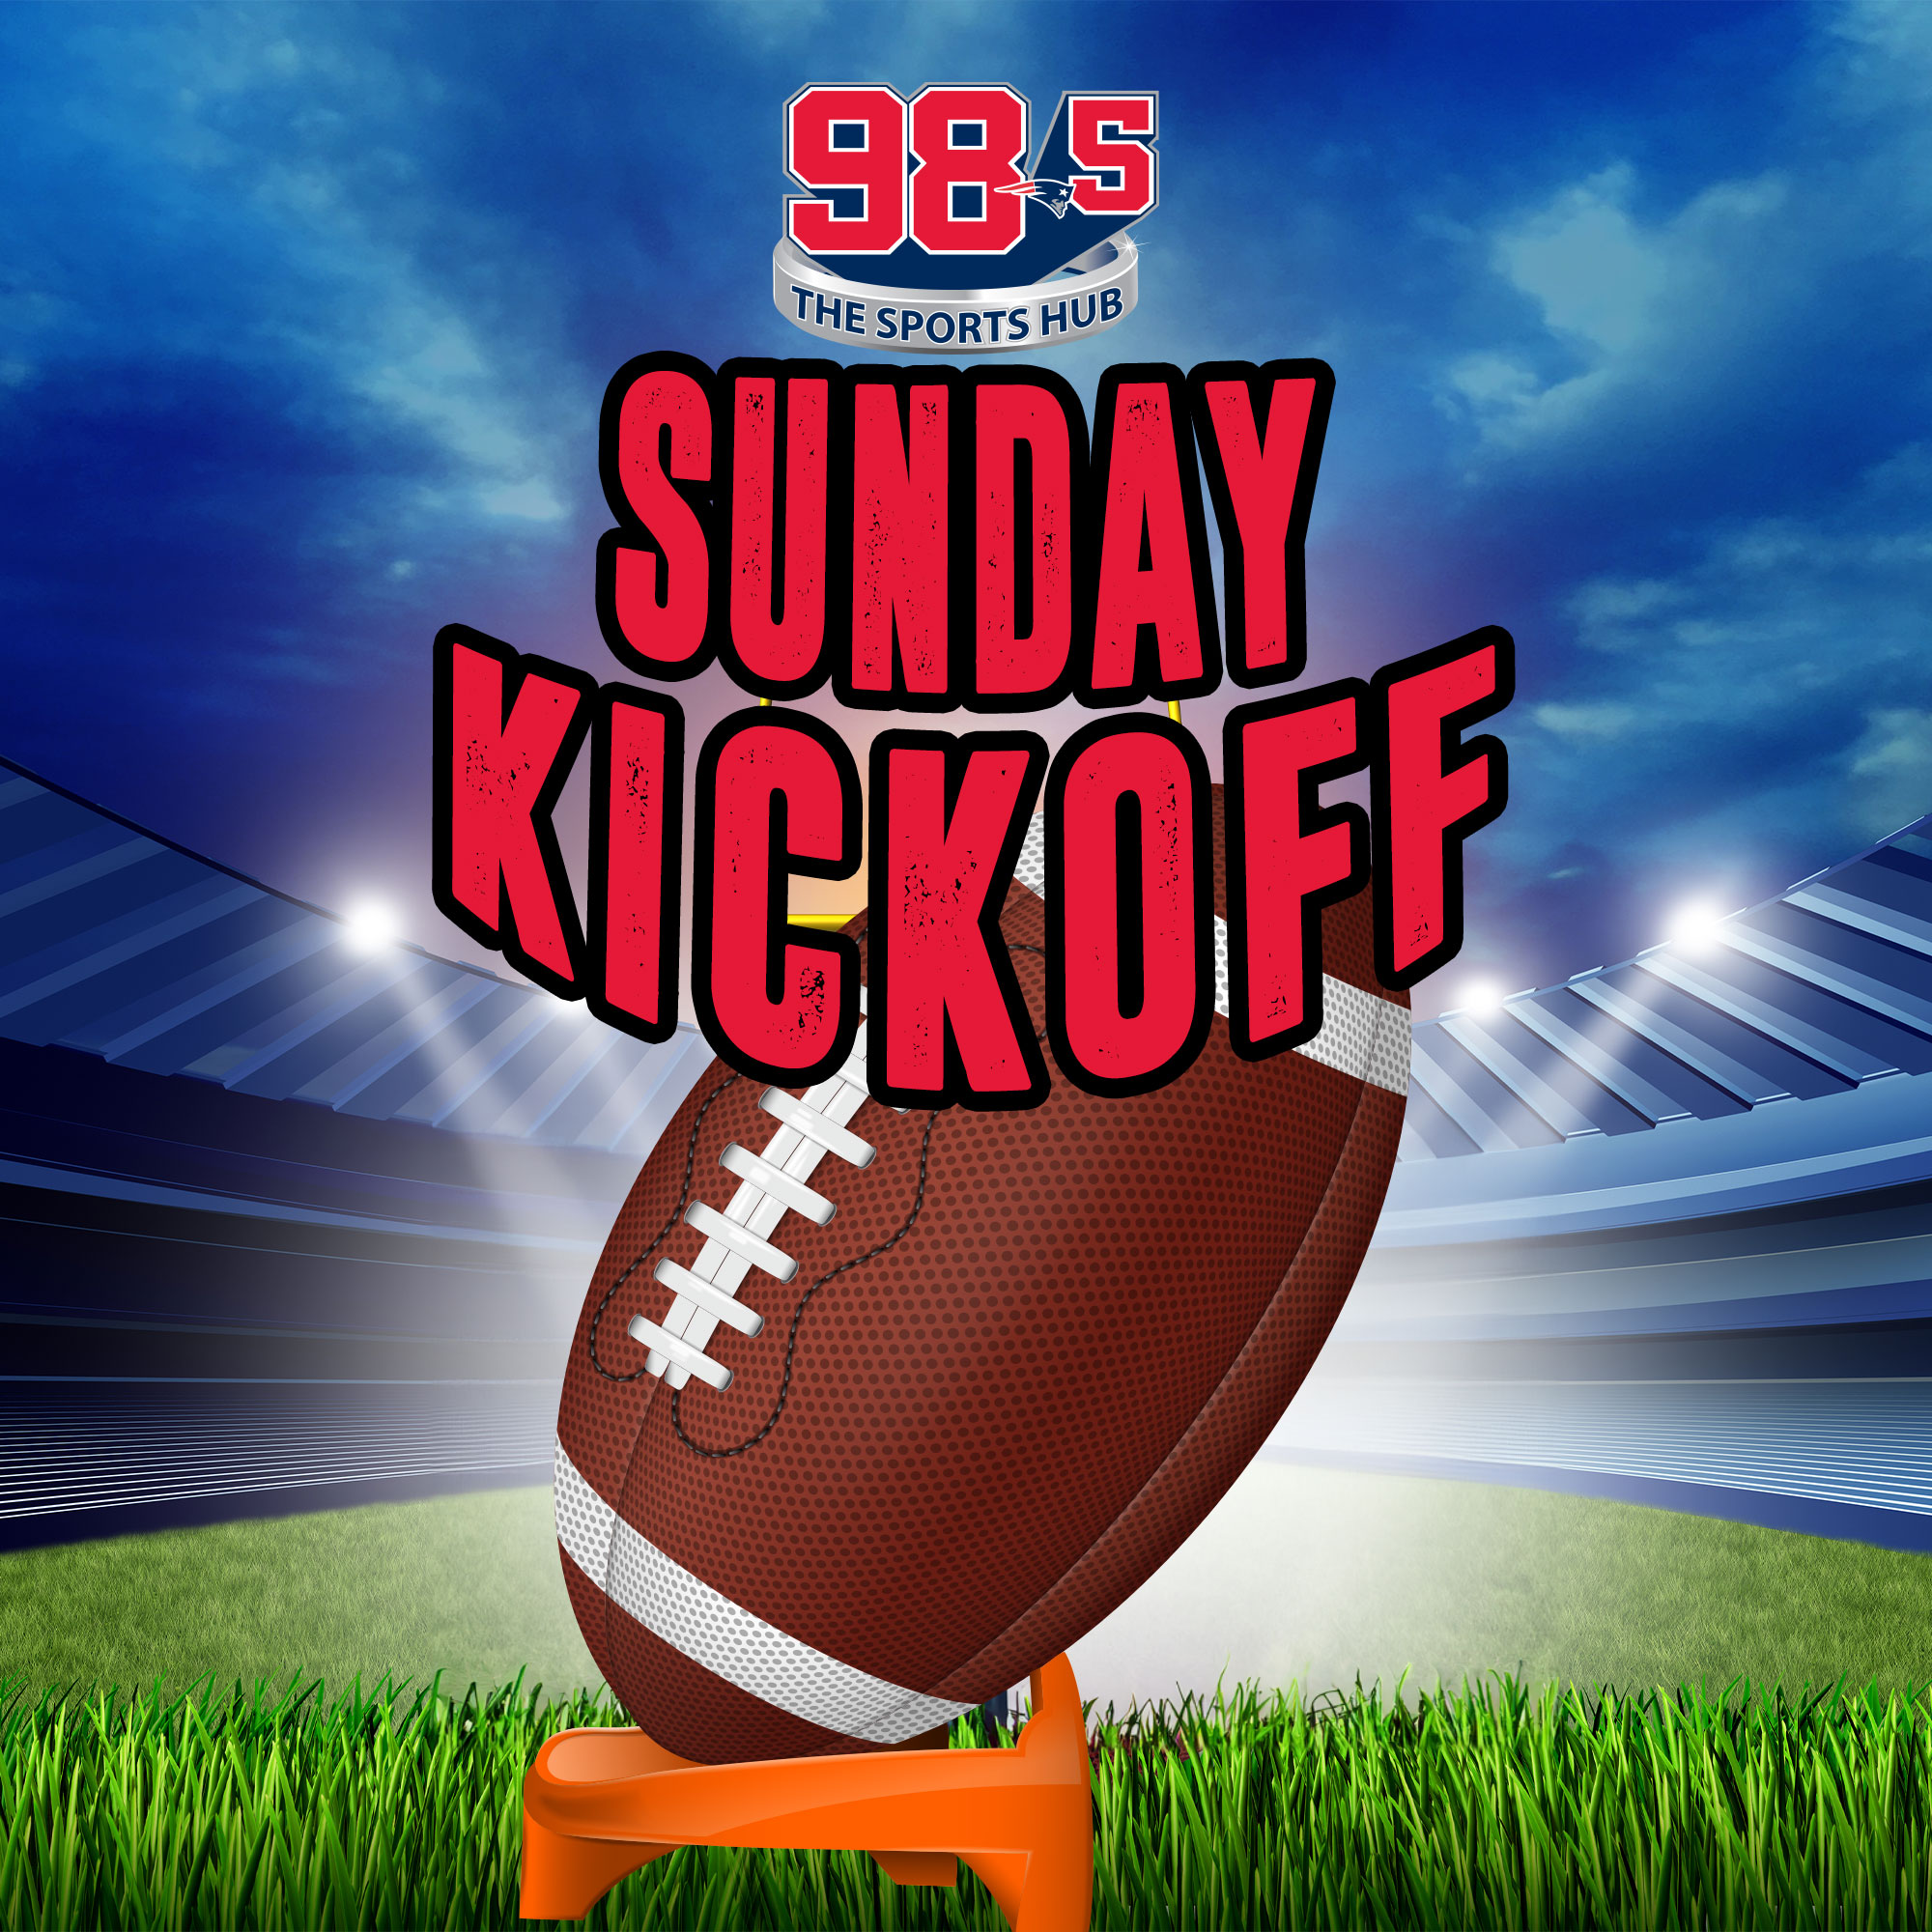 98.5 The Sports Hub Sunday Kickoff